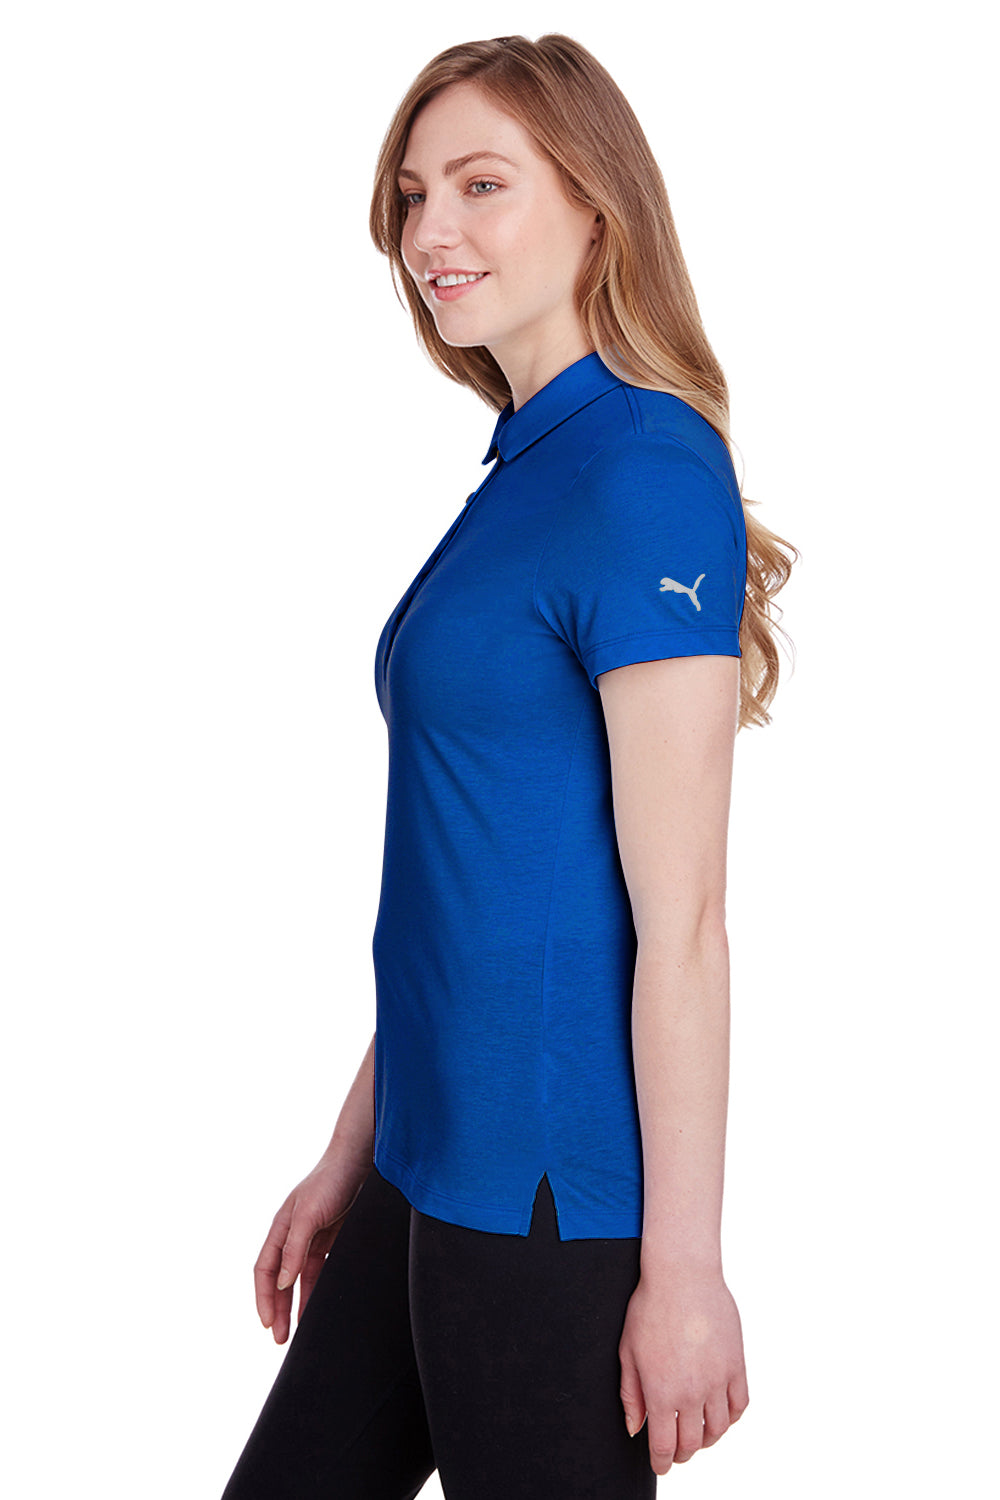 Puma 596921 Womens Fusion Performance Moisture Wicking Short Sleeve Polo Shirt Royal Blue Side